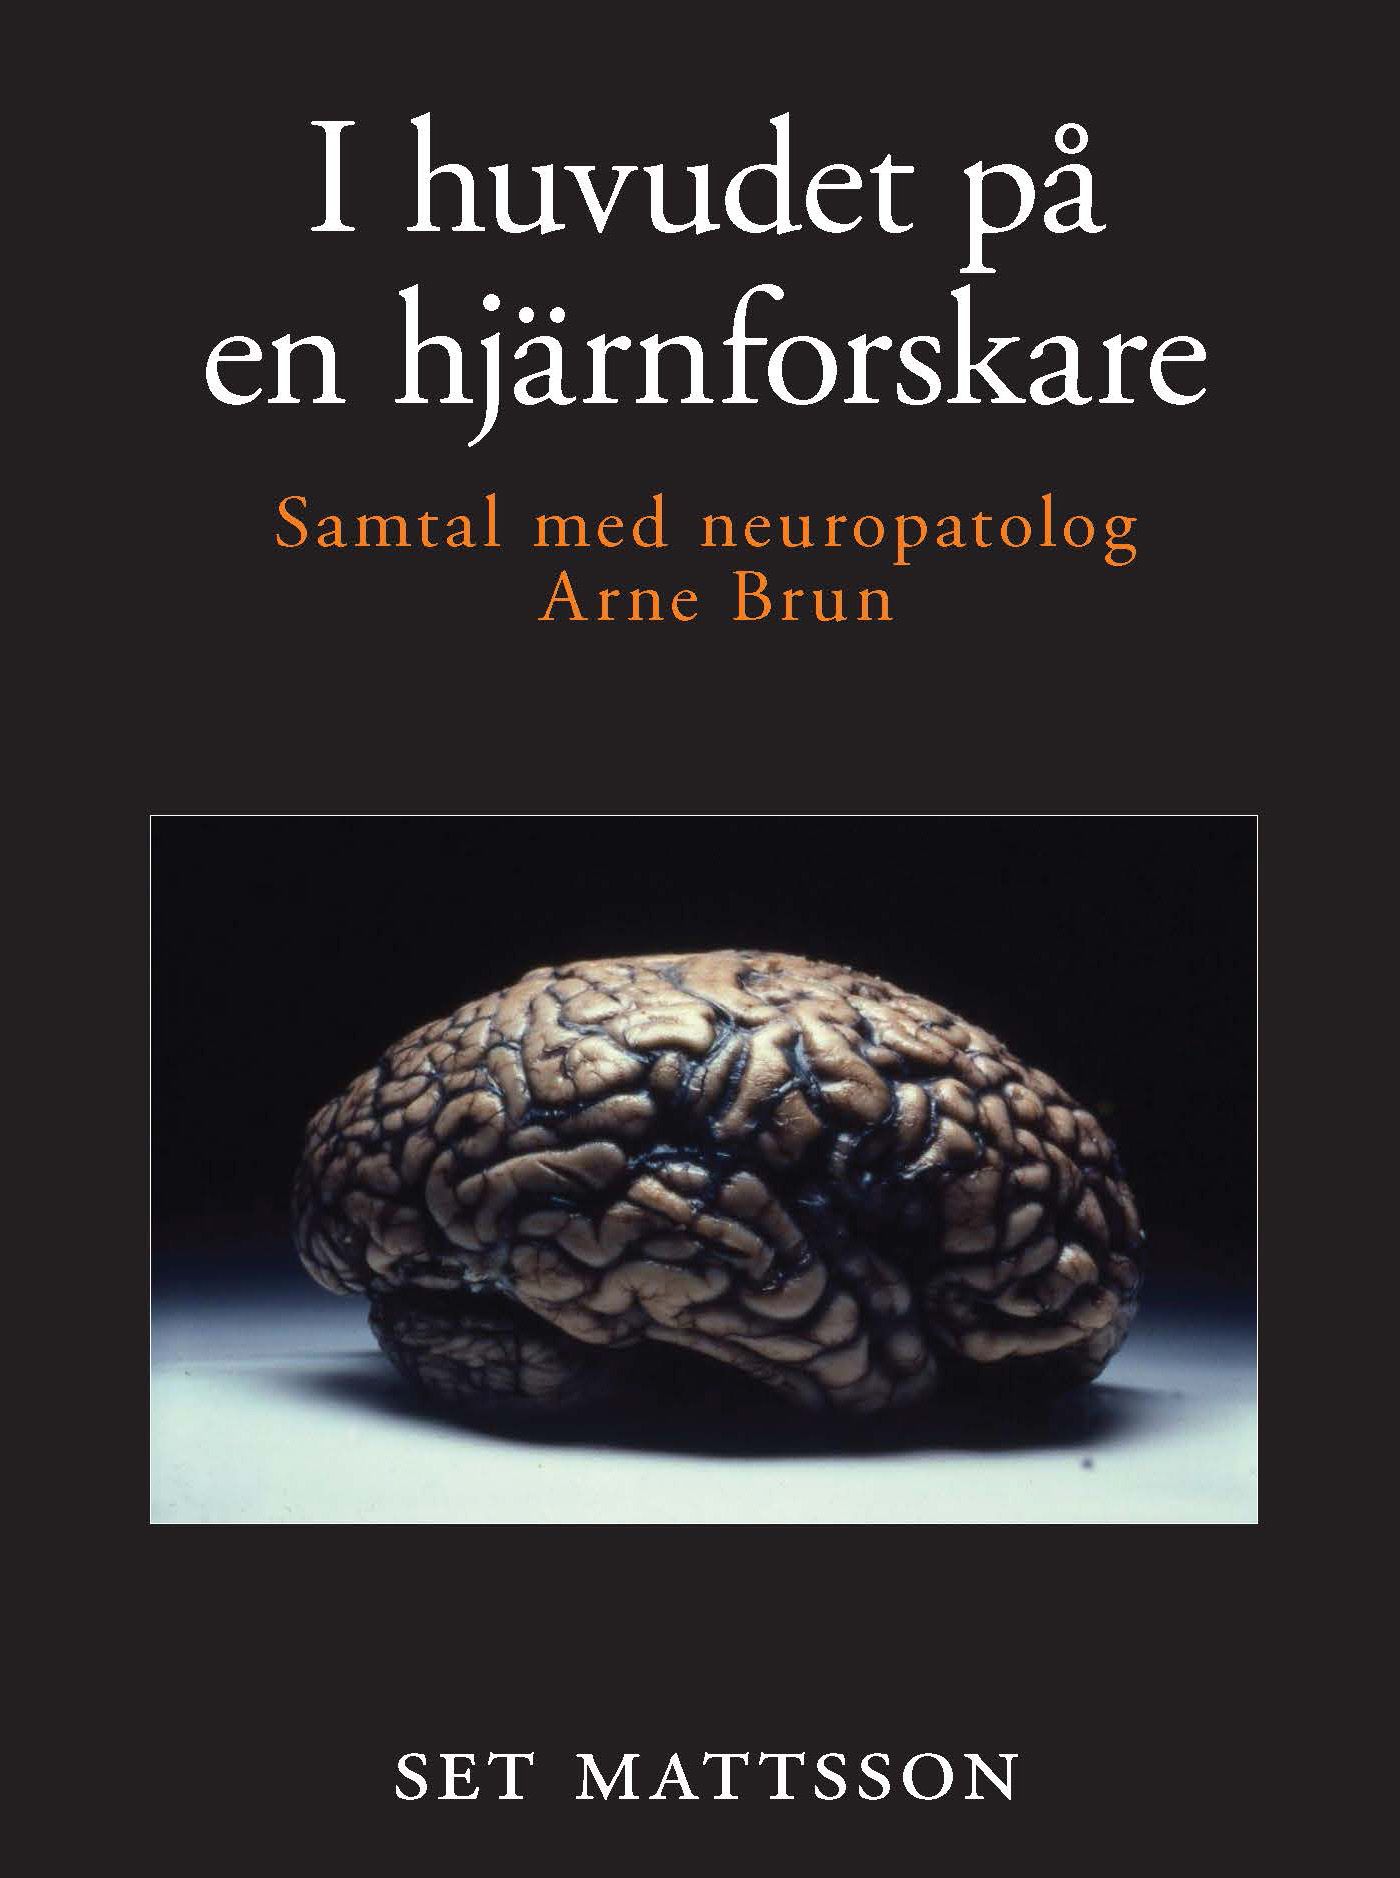 I huvudet på en hjärnforskare - samtal med neuropatolog Arne Brun, e-bog af Set Mattsson